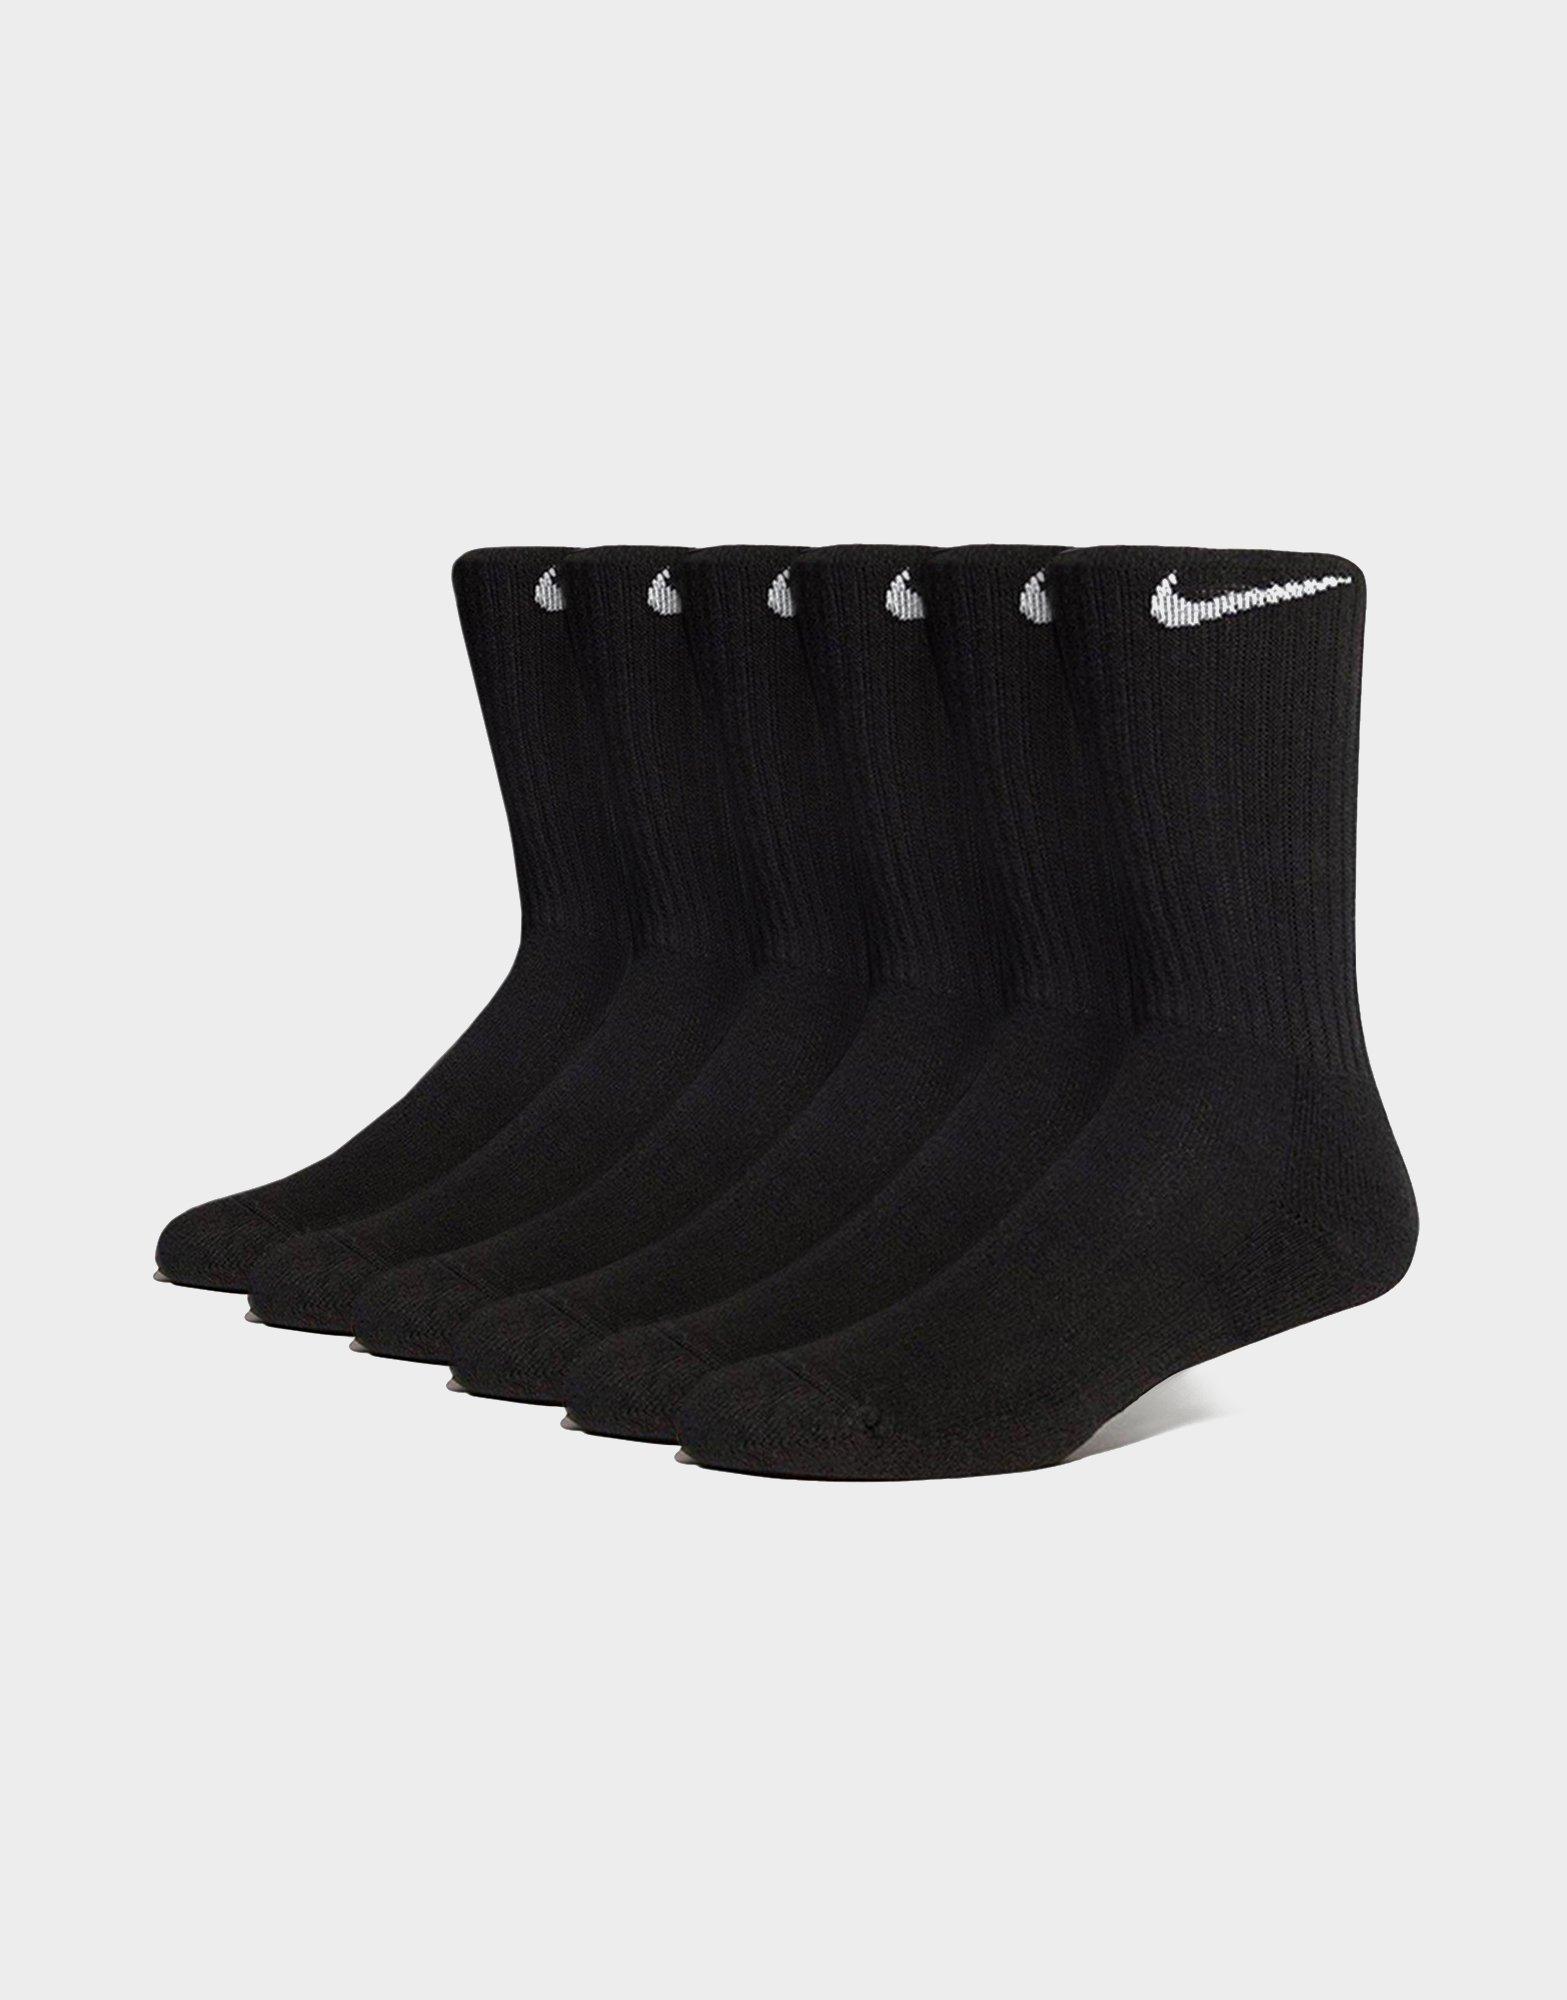 nike black socks 6 pack